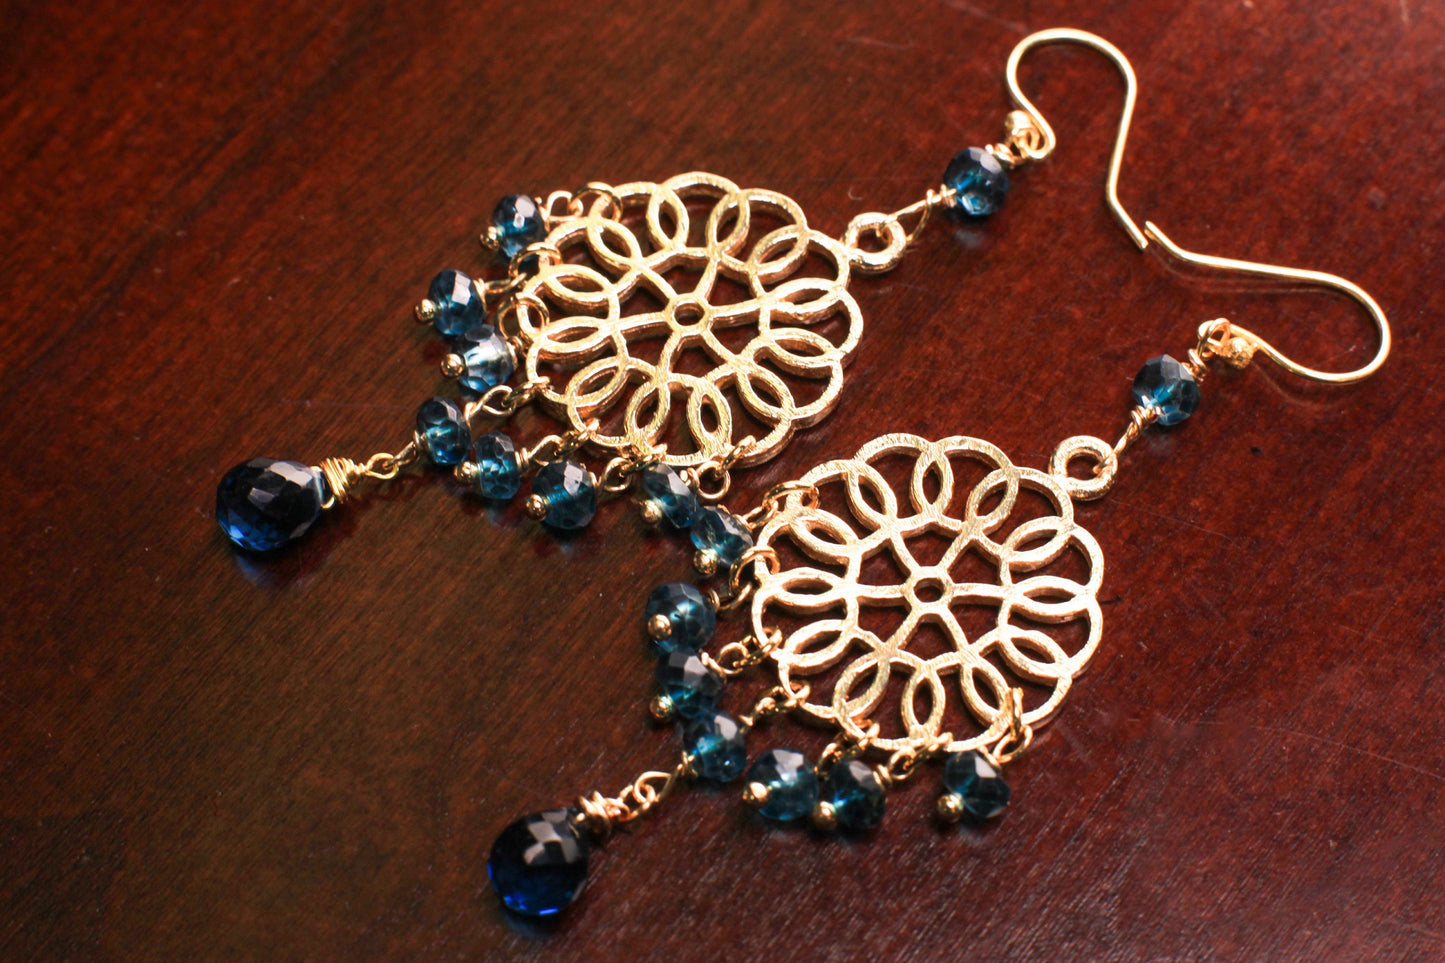 London Blue Topaz Chandelier brush gold vermeil earrings .Wire Wrapped handmade Gift valentines midnight blue earring.